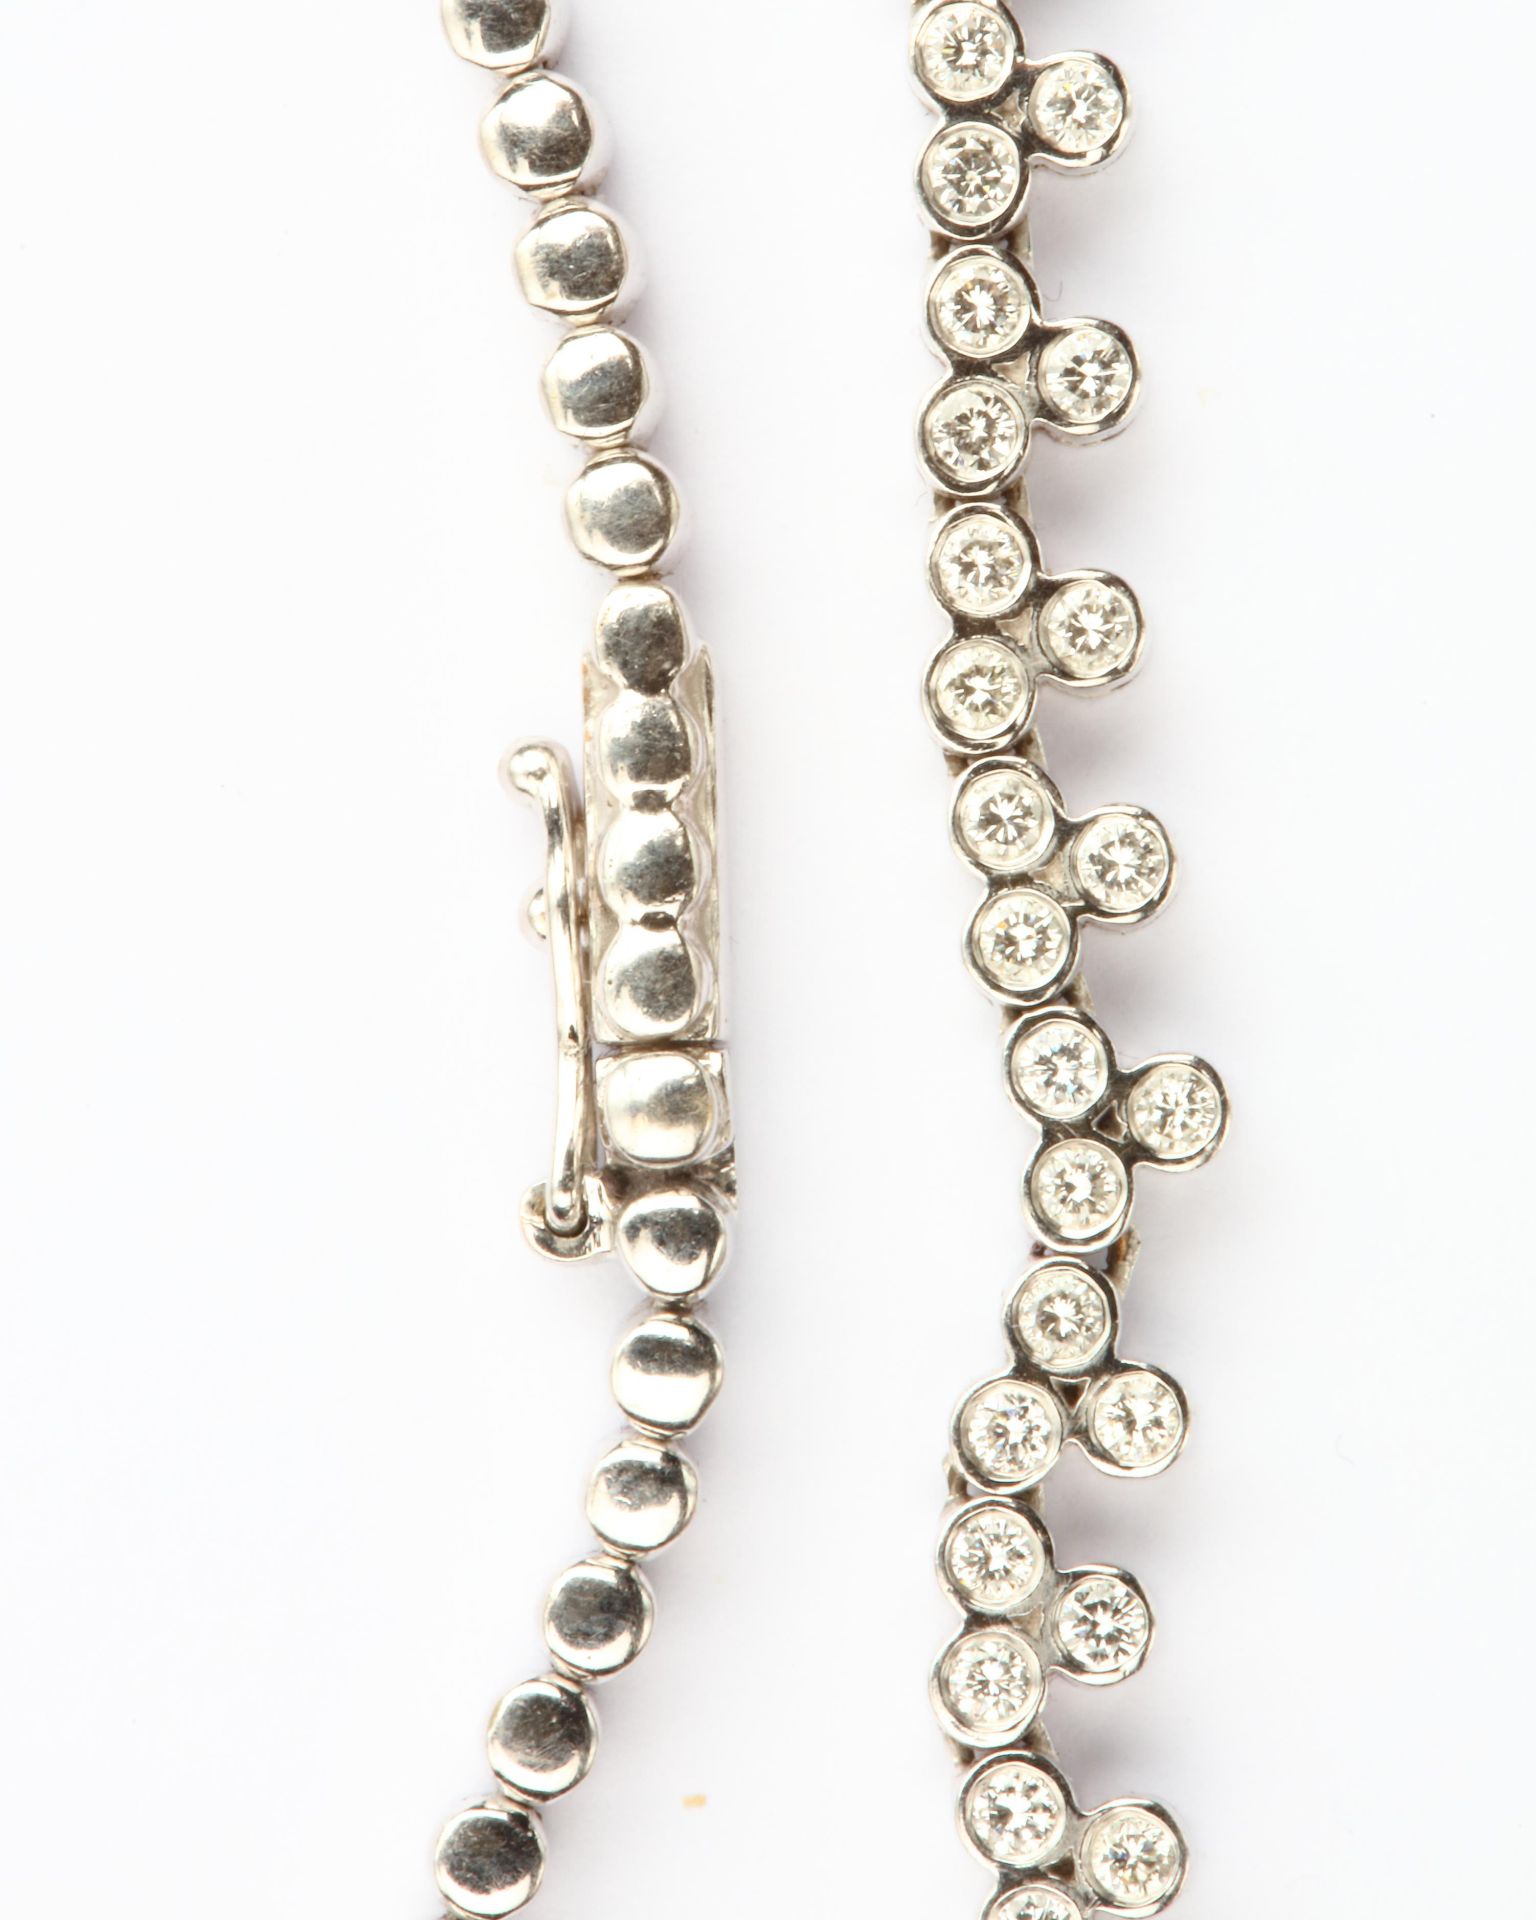 No VAT Ladies 18ct White Gold 5CT Diamond Necklace Set With 150 Diamonds - Image 5 of 5